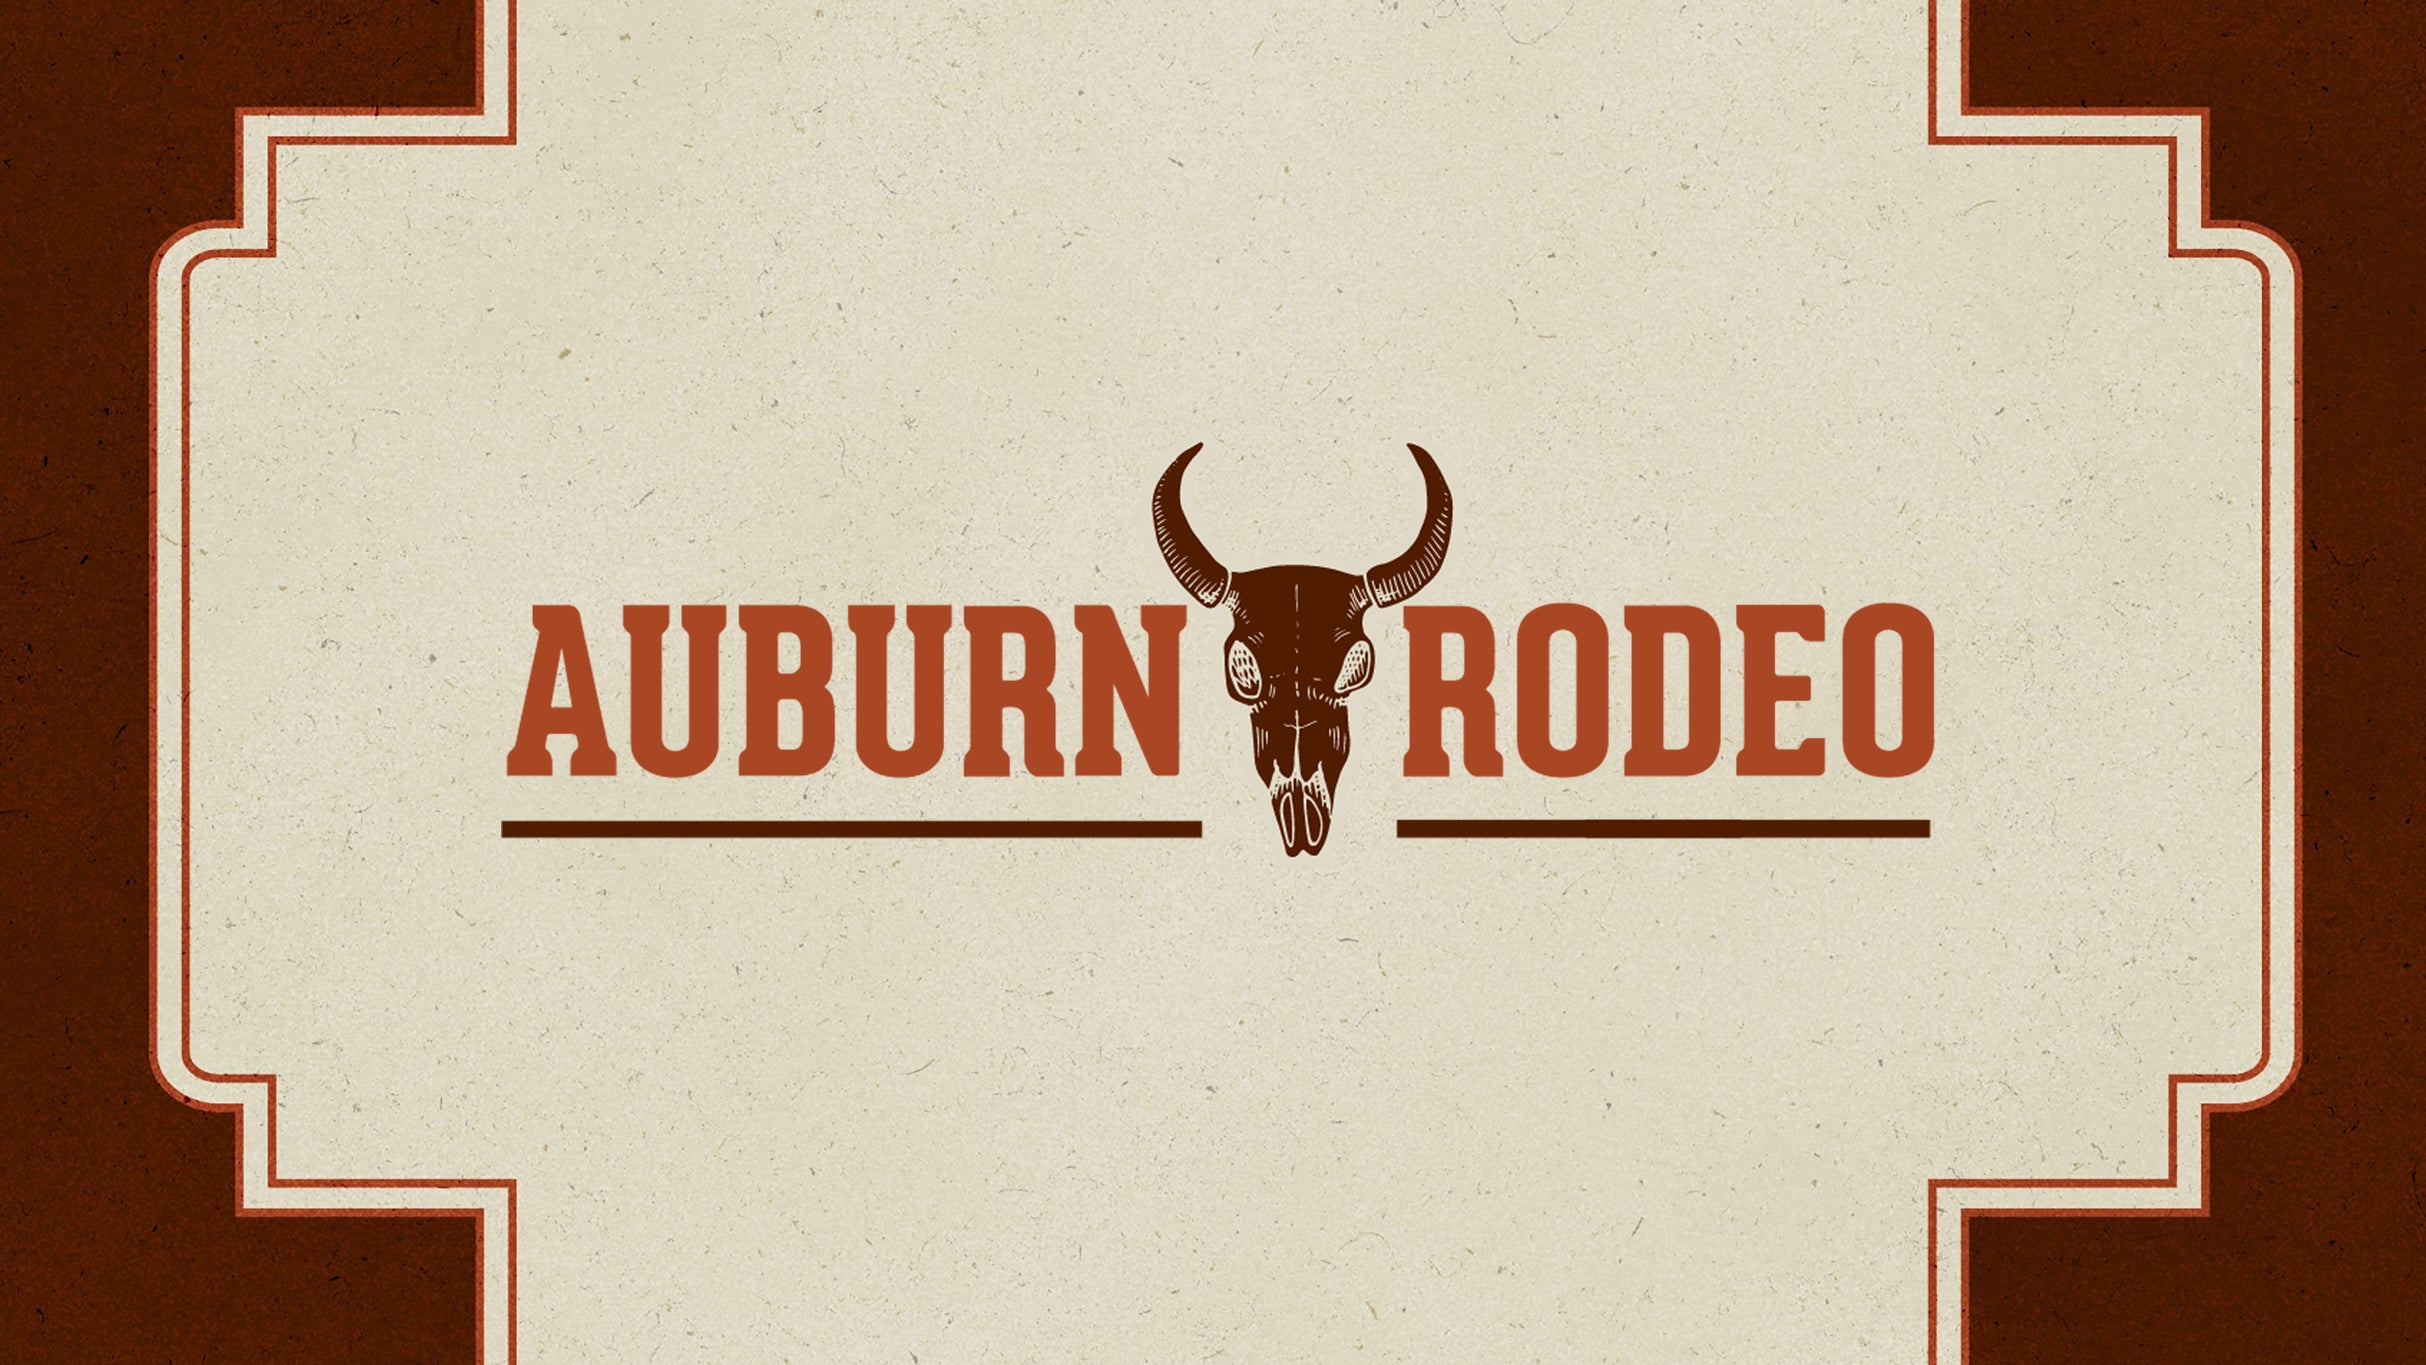 The Auburn Rodeo presale information on freepresalepasswords.com